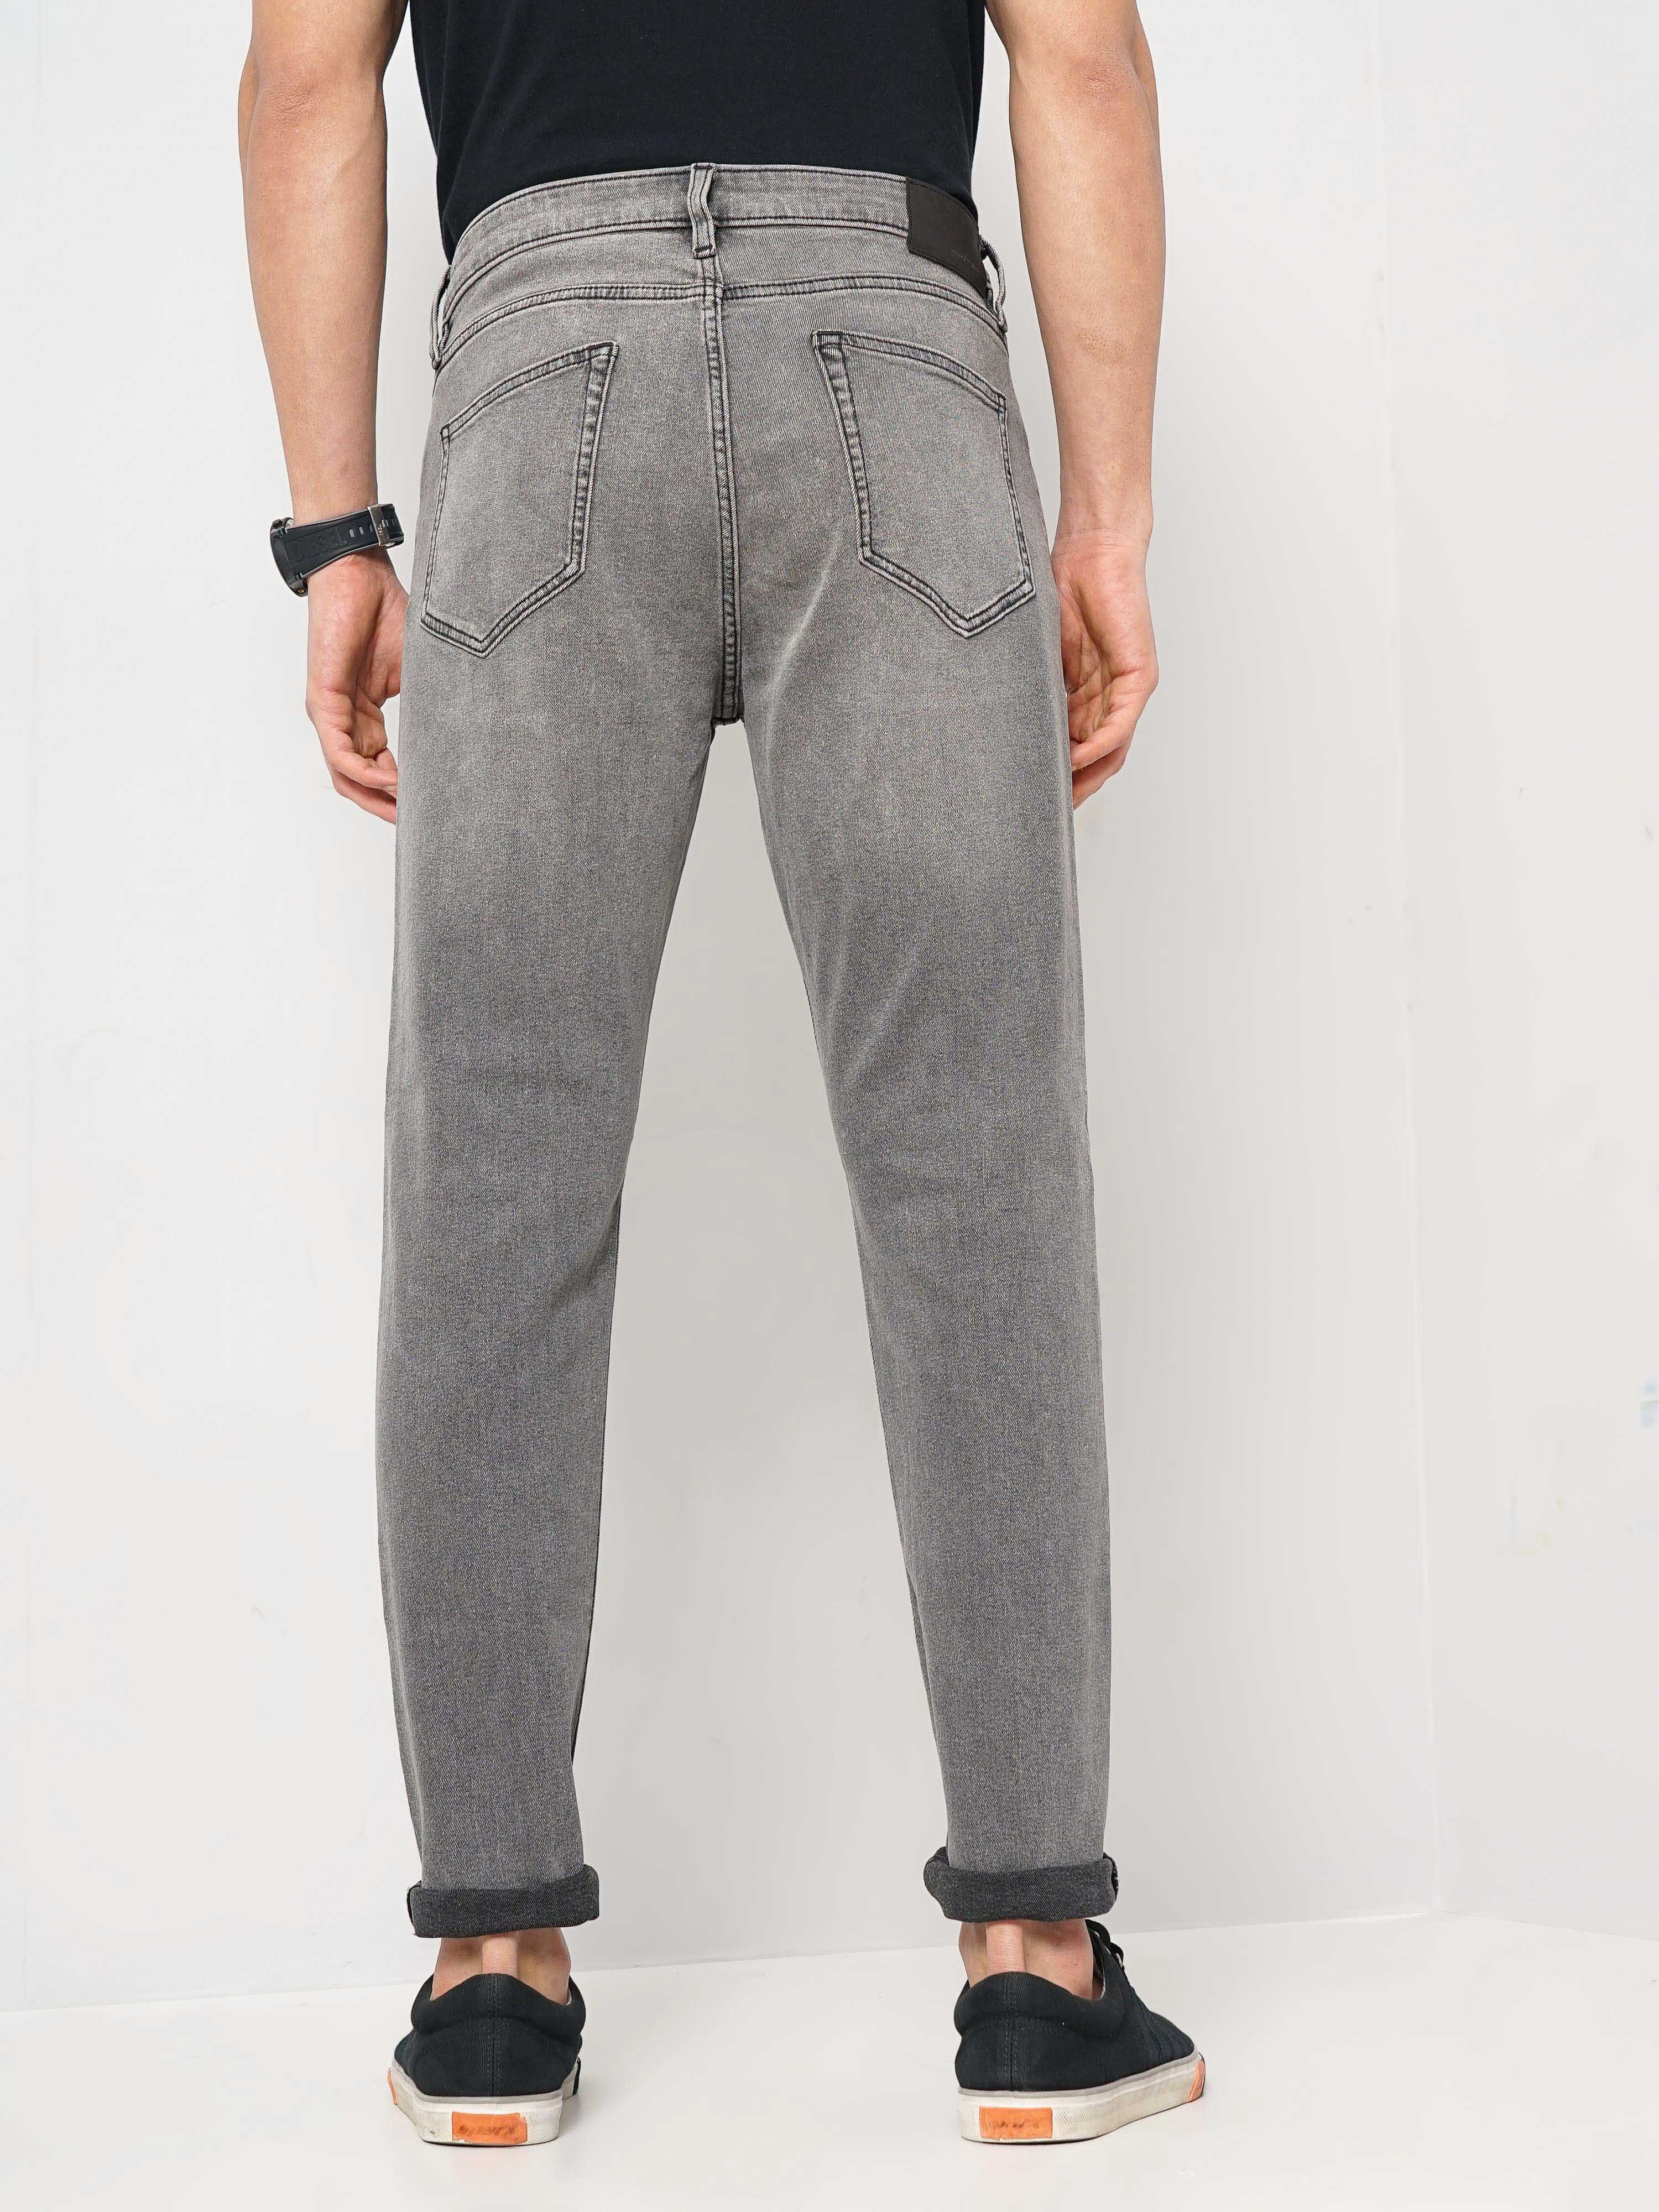 Celio Men Grey Solid Skinny Fit Cotton Jeans